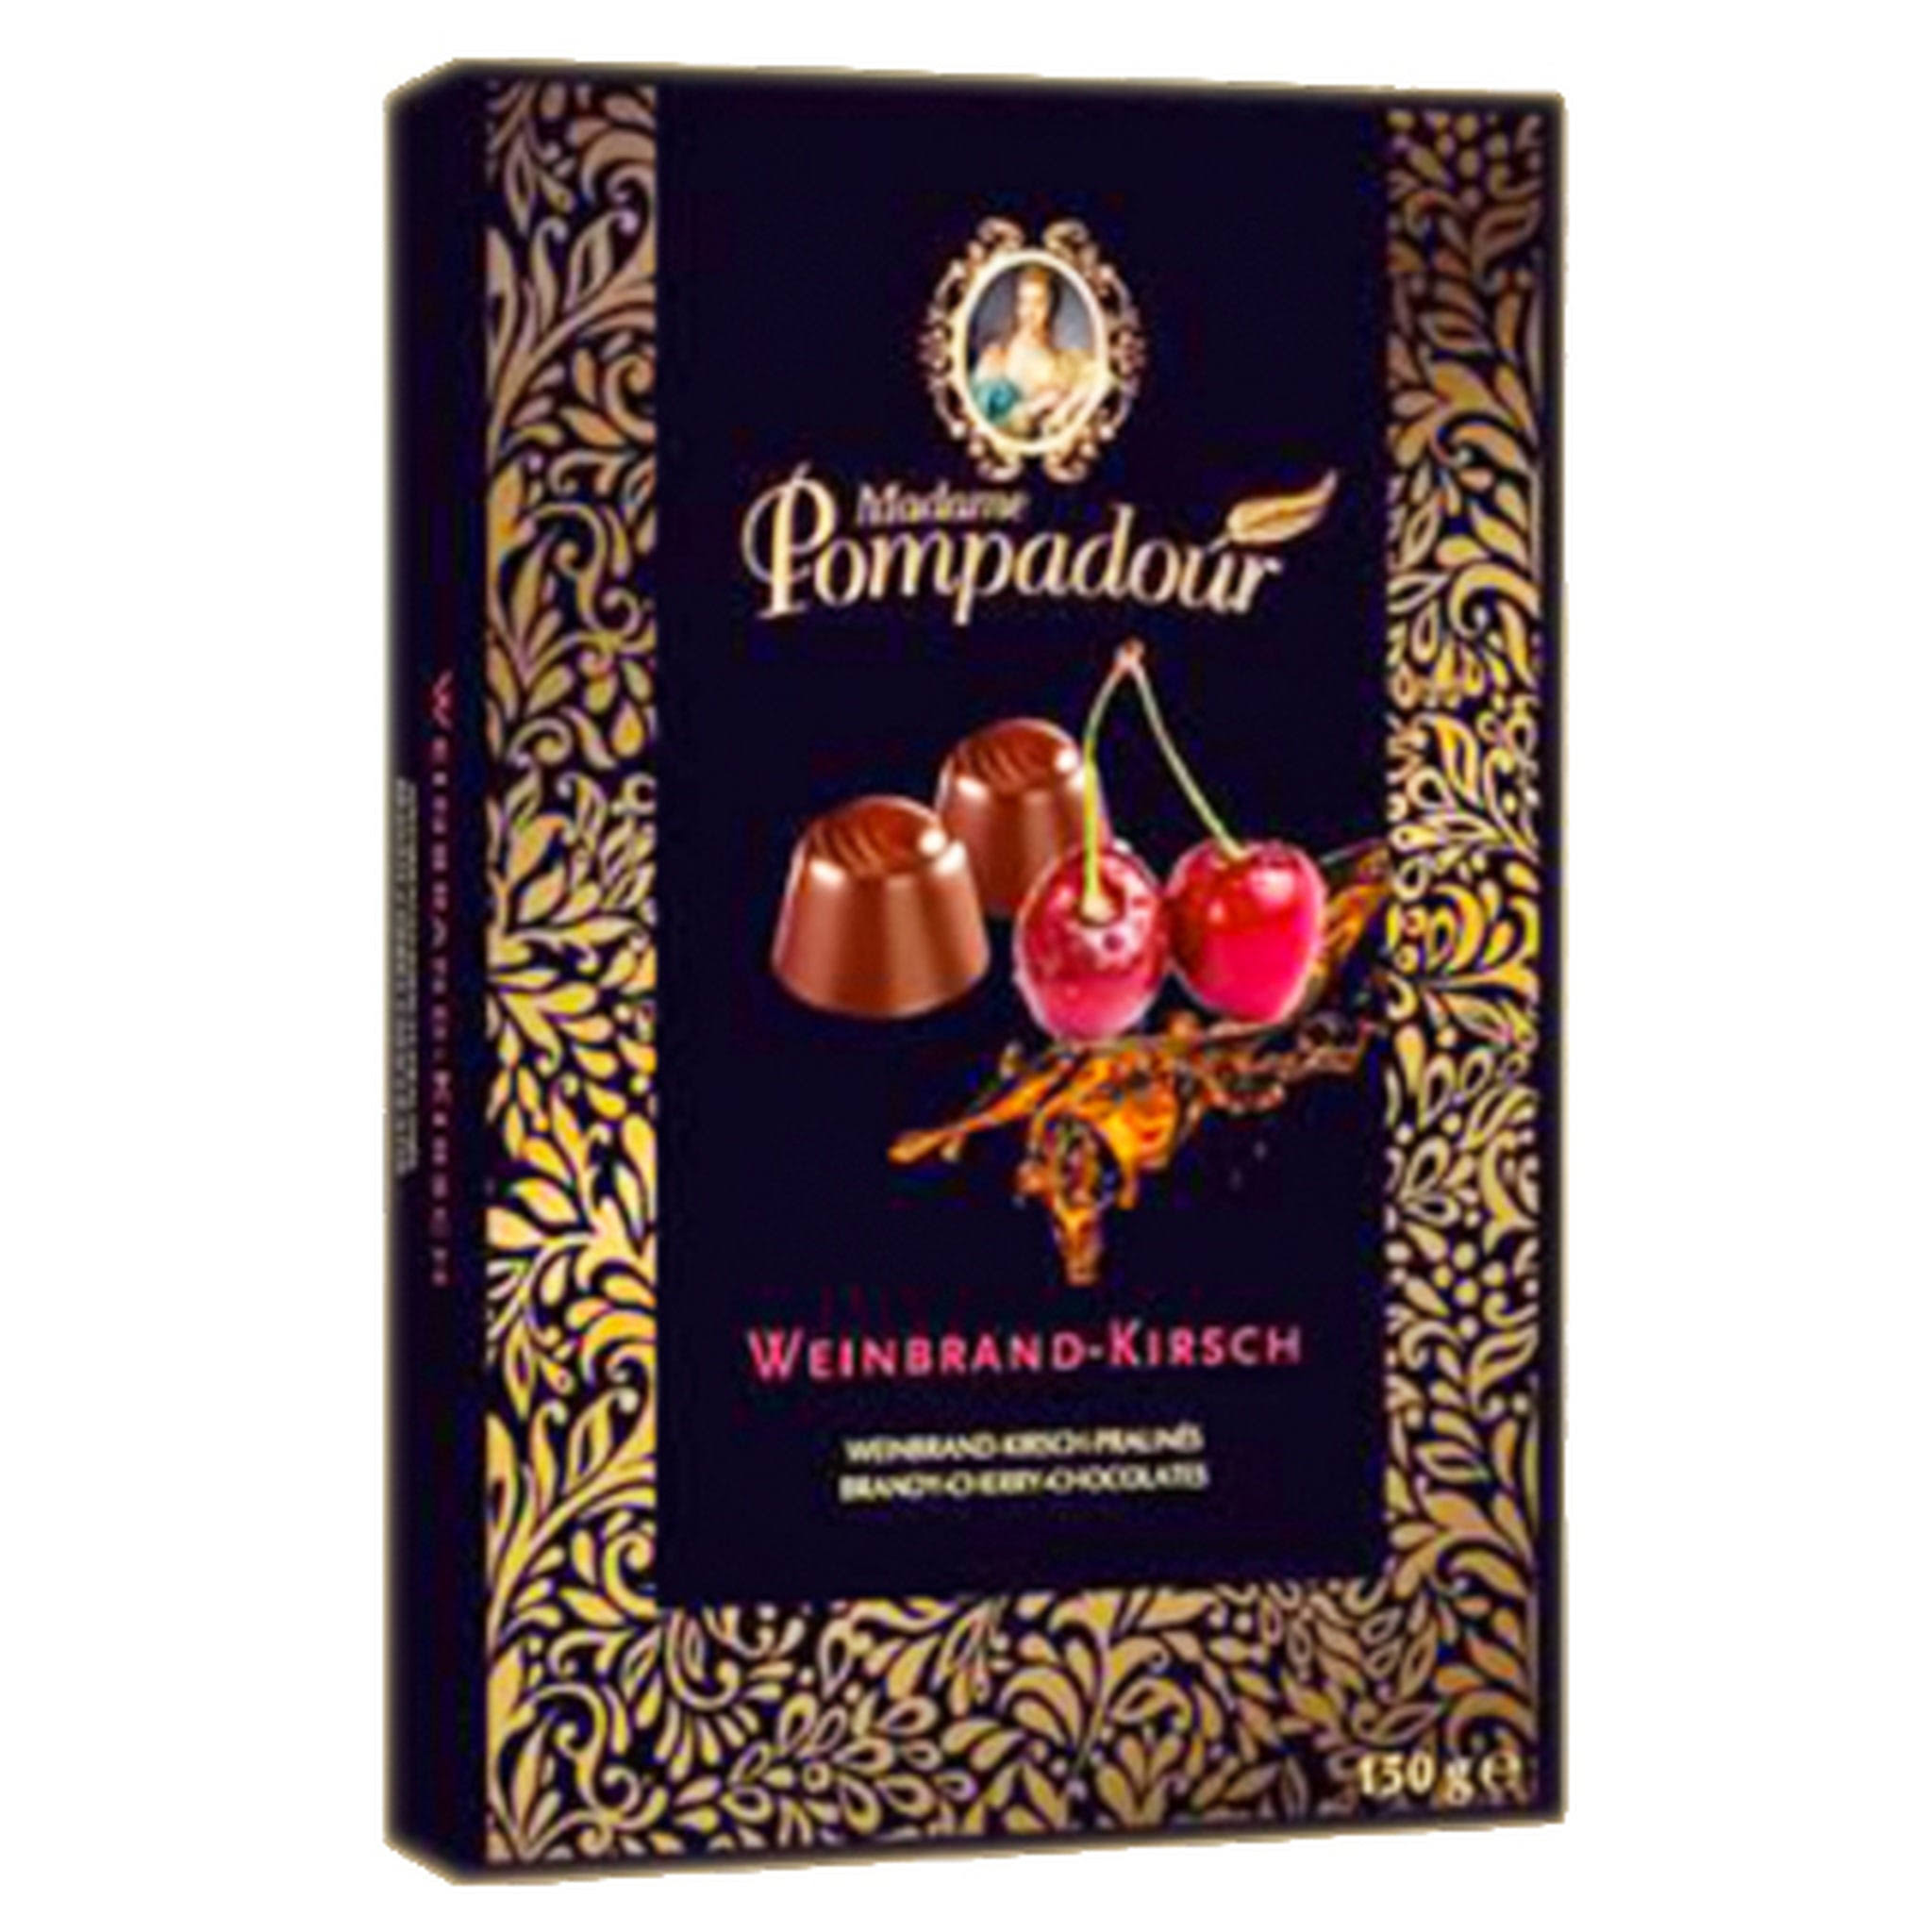 Madame Pompadour Cherry Brandy Filled Chocolates Box 150g